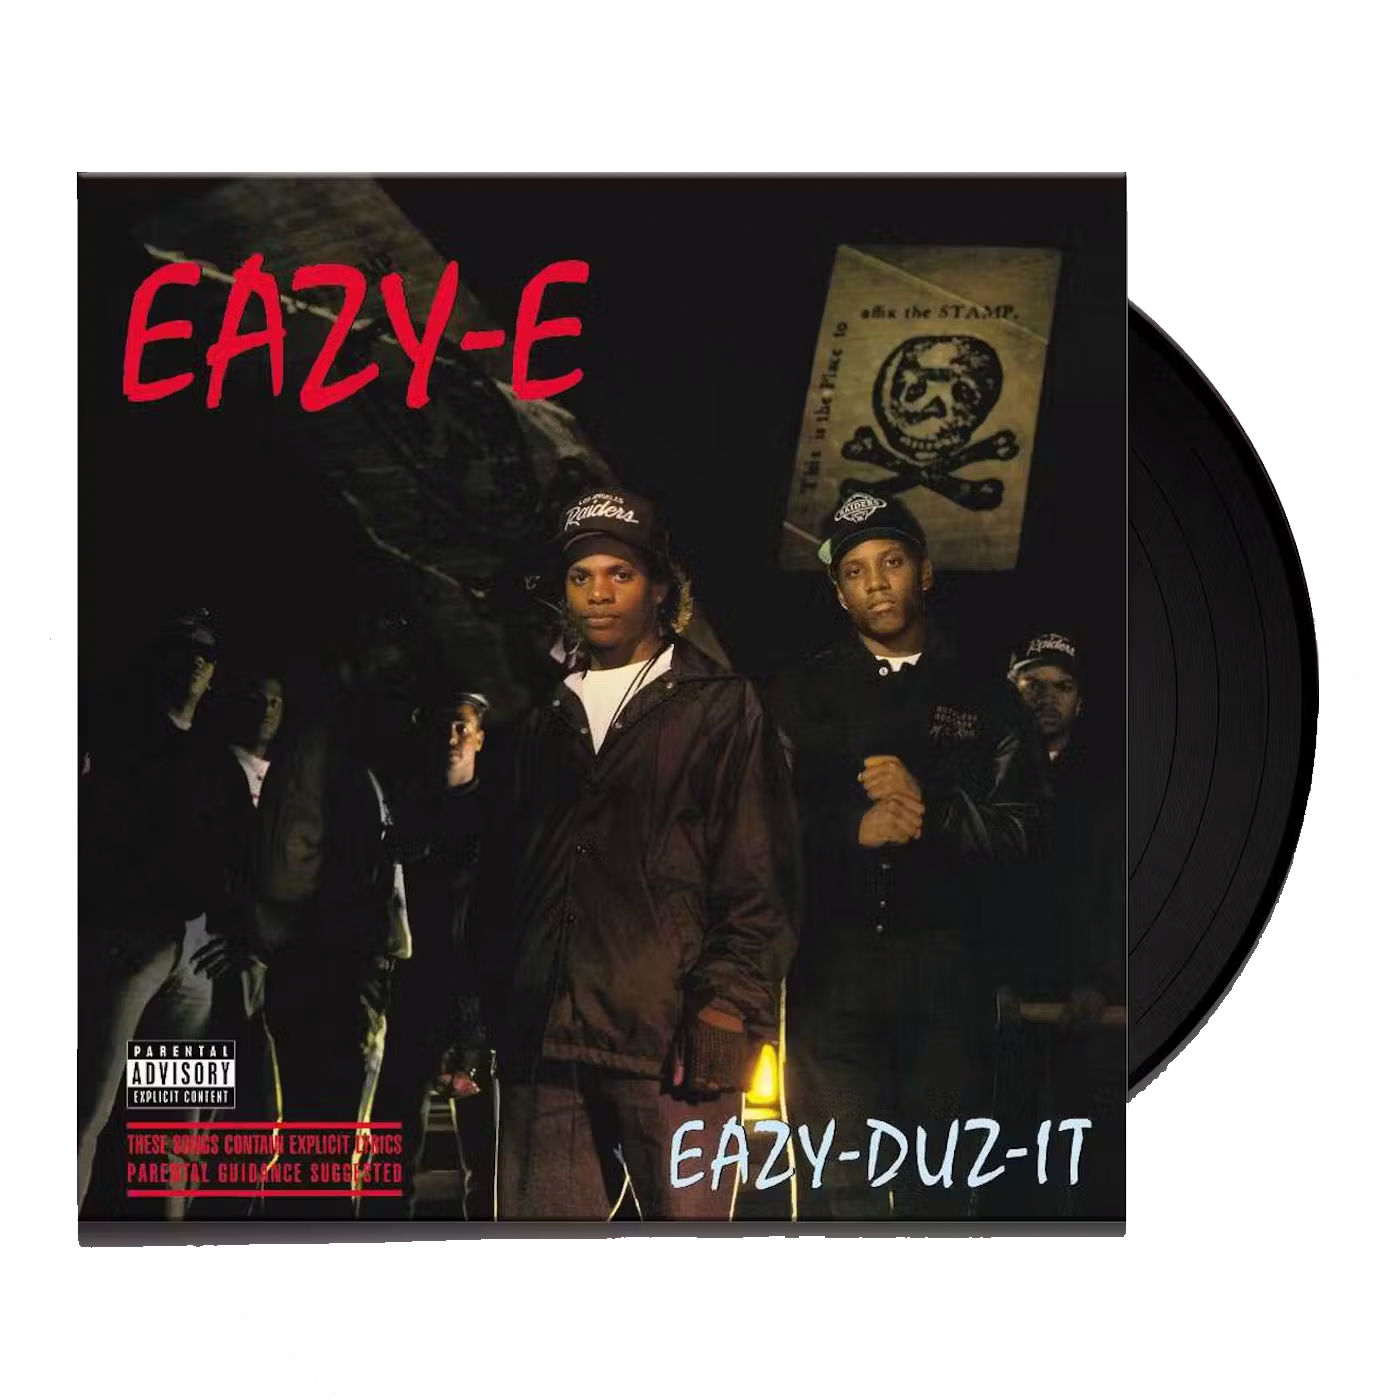 Eazy-E - Eazy-Duz-It: Vinyl LP